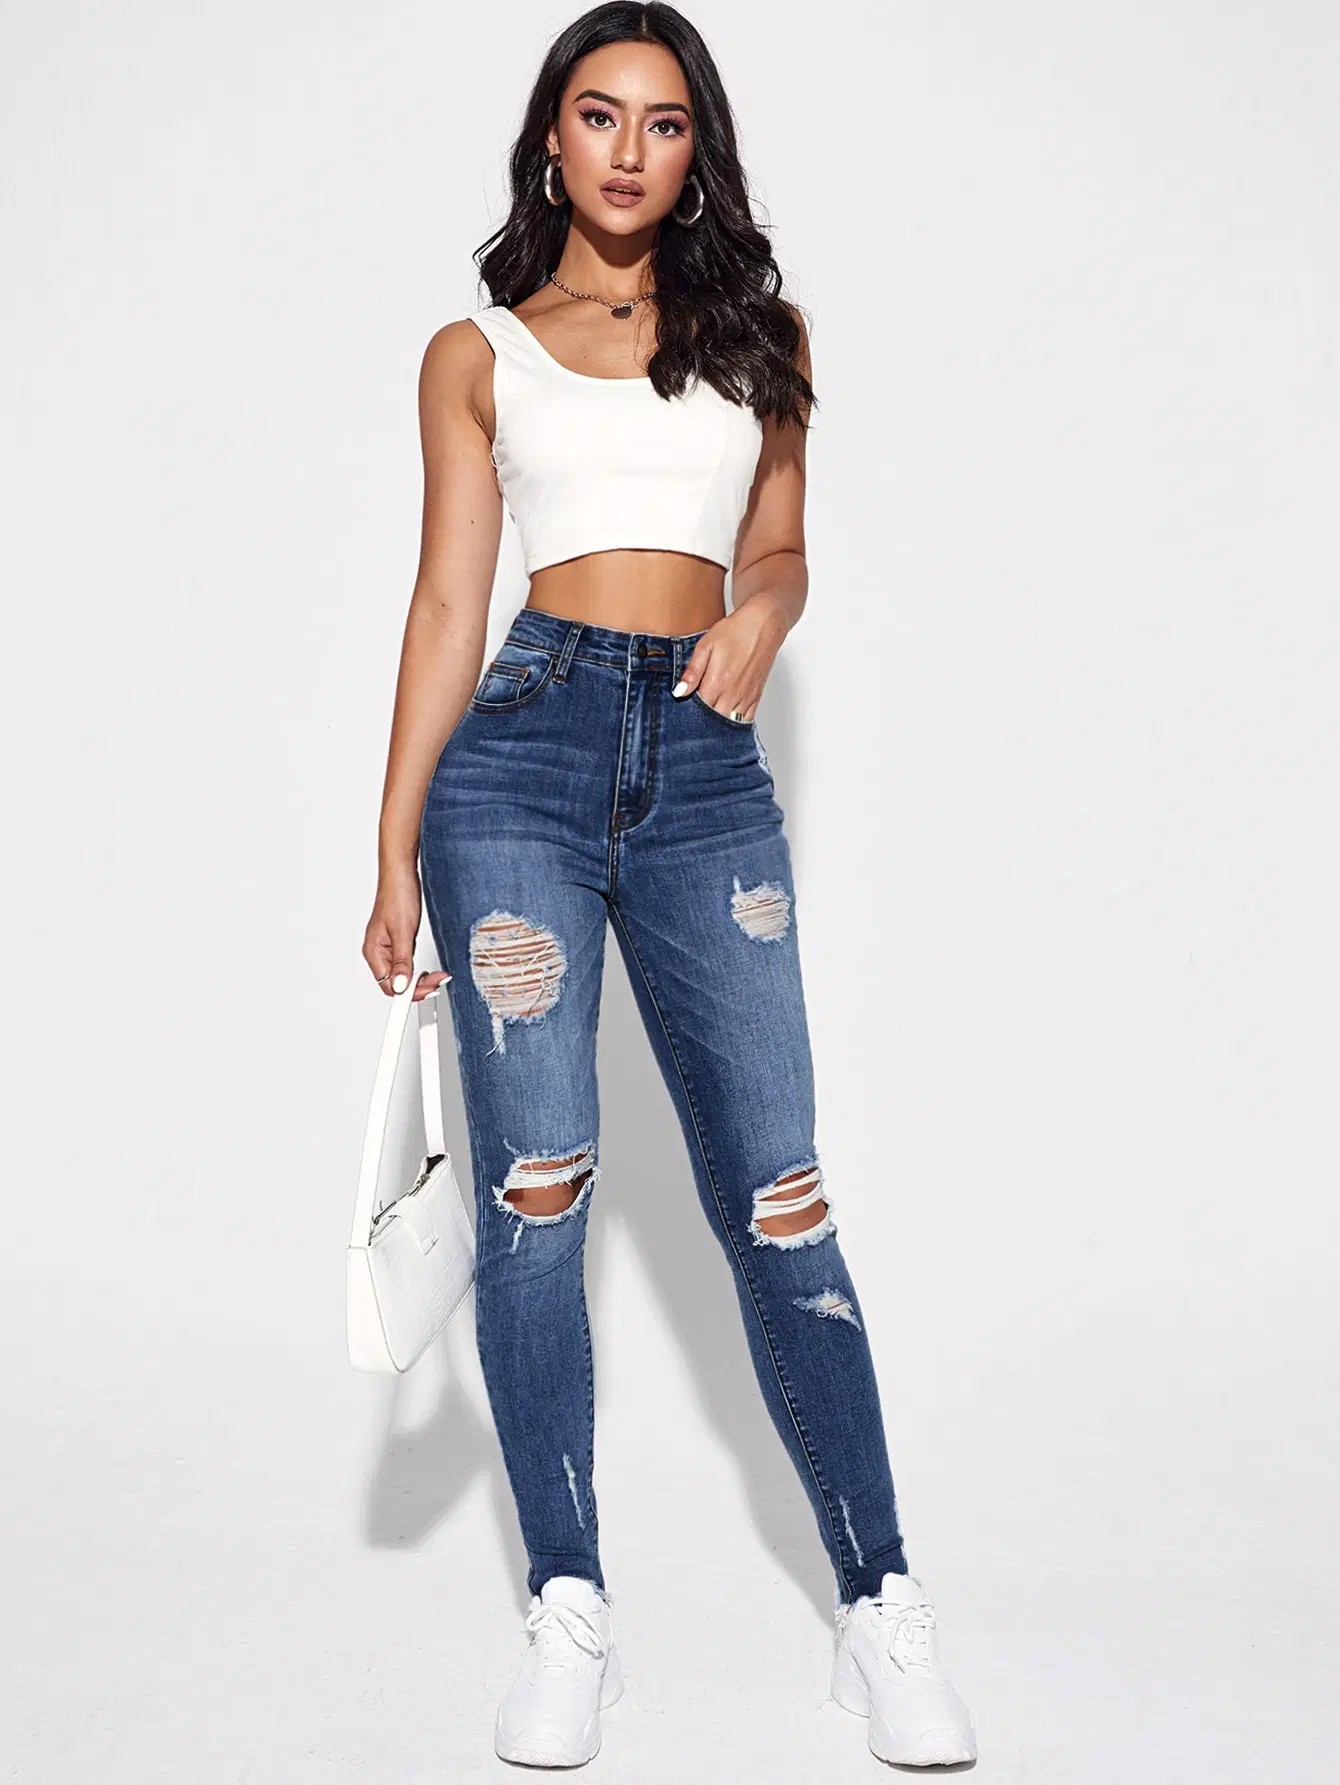 New Fashion Lady Jeans High Waisted Scratch Holes and Raw Edge Bottom Hem Stretch Quality OEM&ODM Slim Fitting Jeans